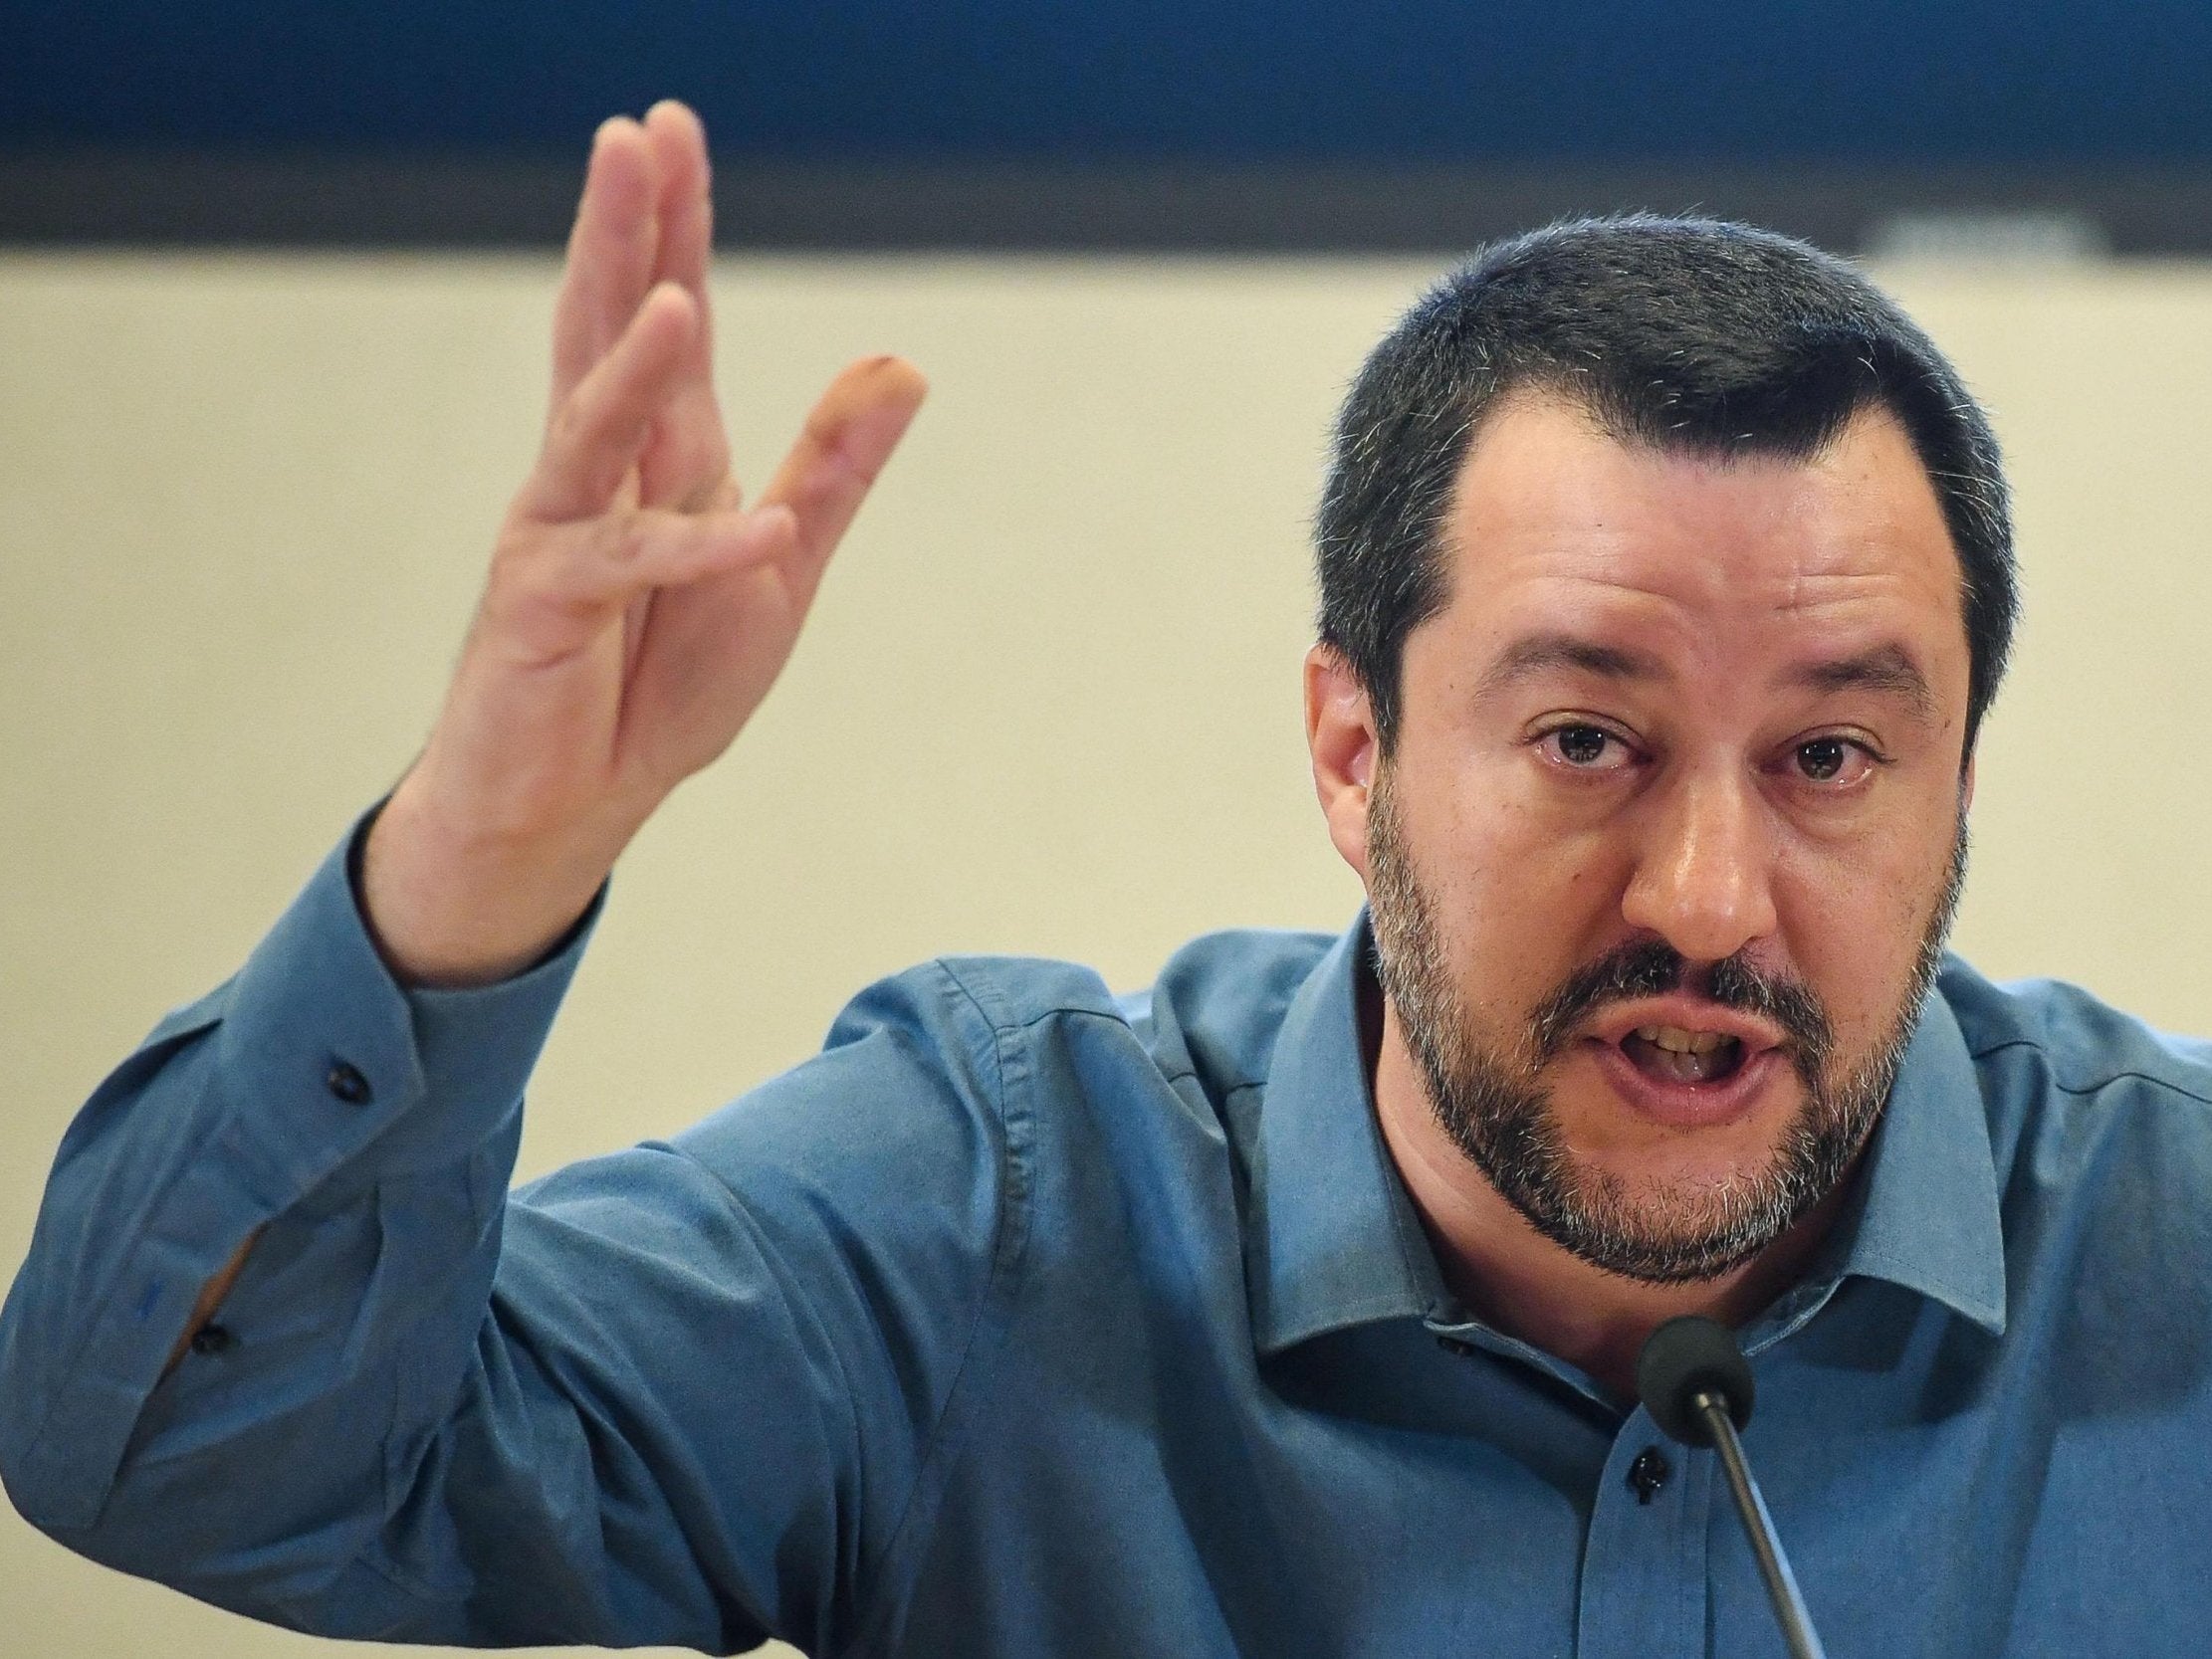 Italy's Deputy Premier and Interior Minister Matteo Salvini